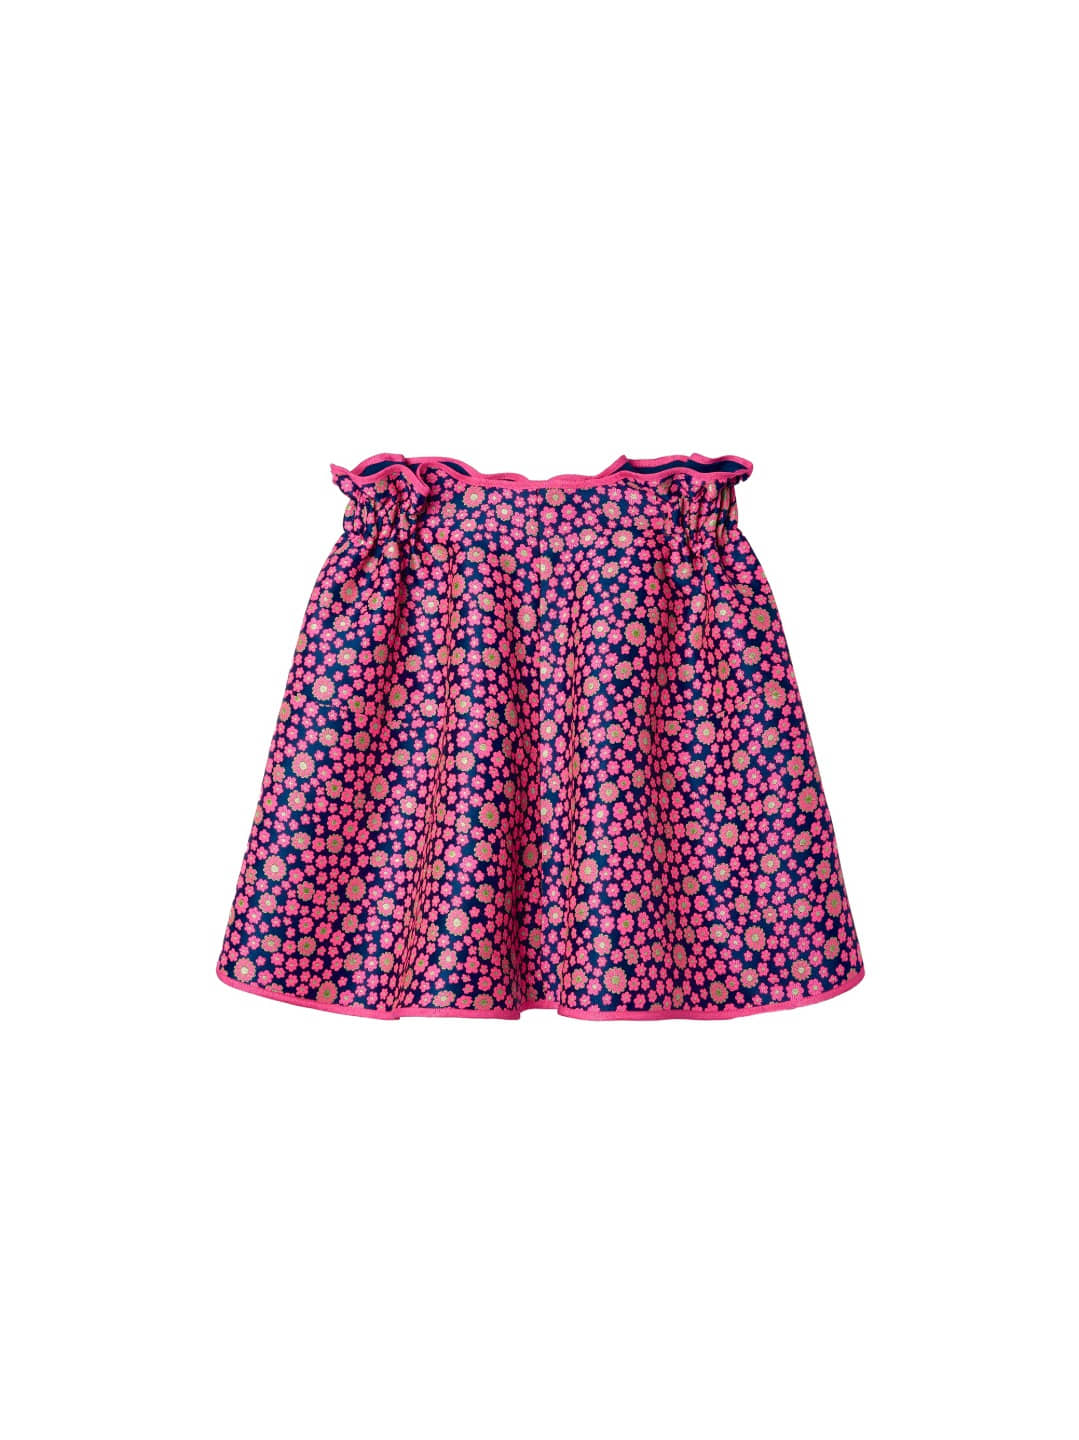 218. Floral Jacquard Gathered Skirt / 플로럴 자카드 개더 스커트